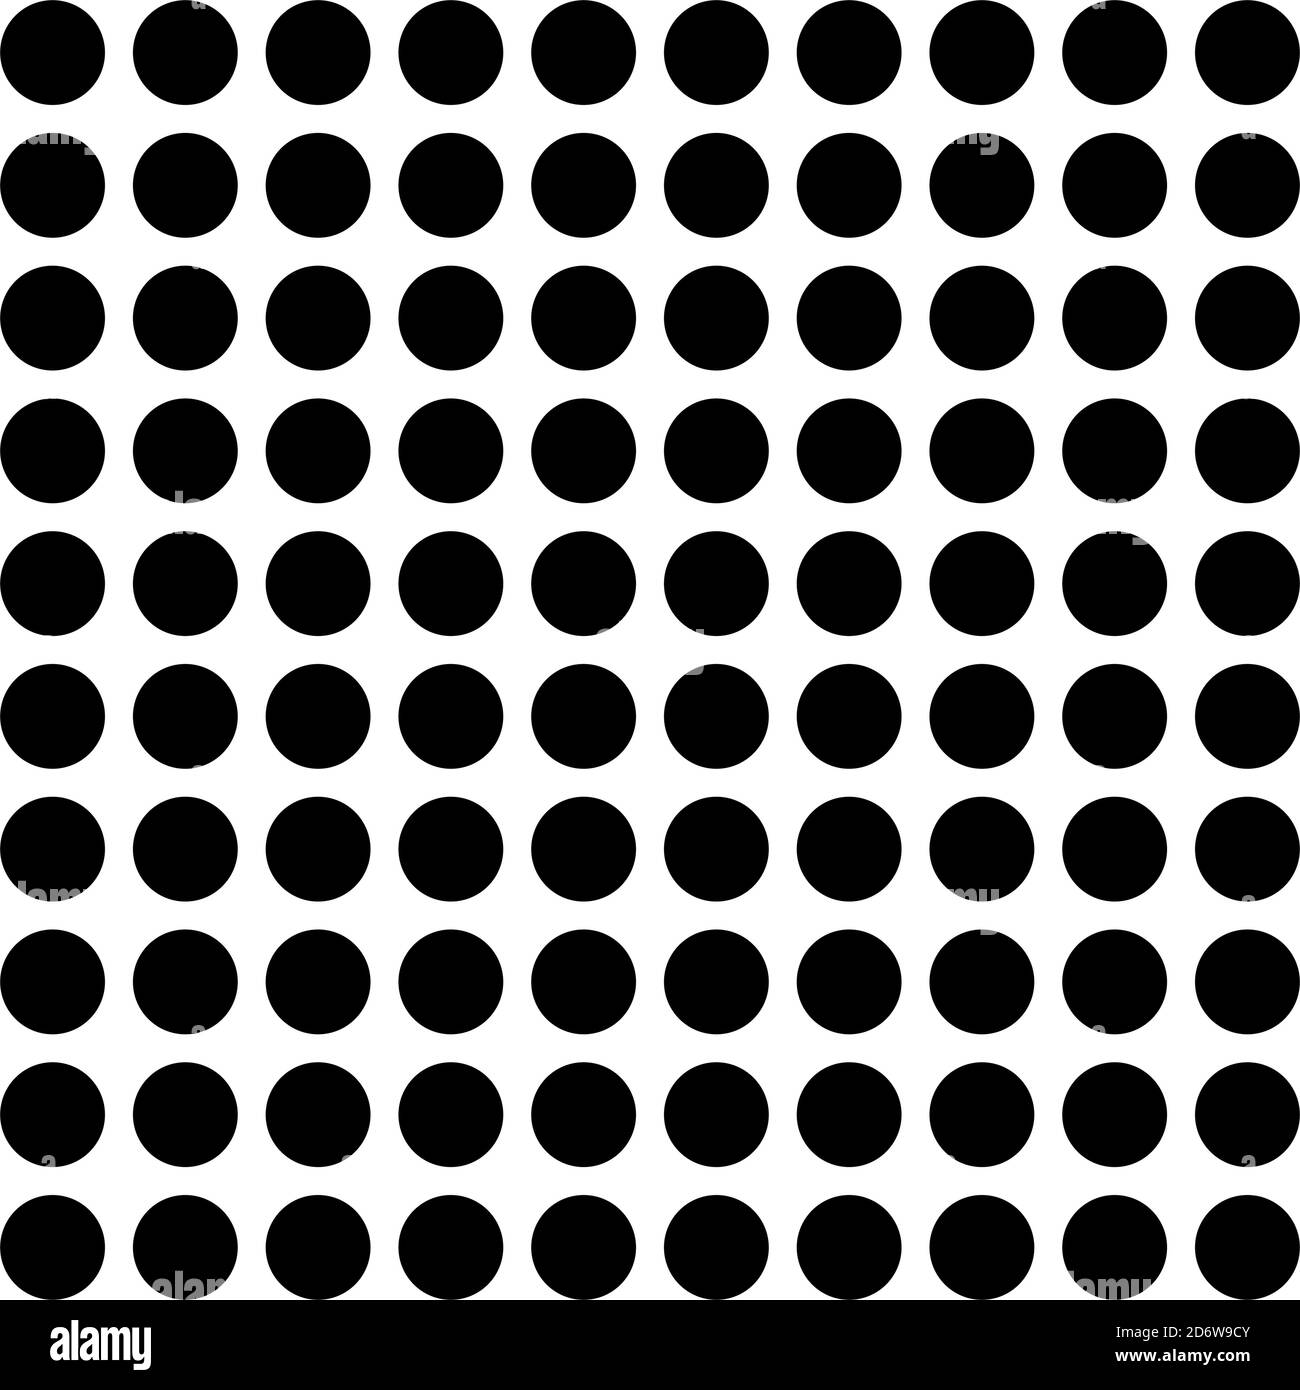 Black Circles vector illustration. Circles design element, circles pattern Stock Vector